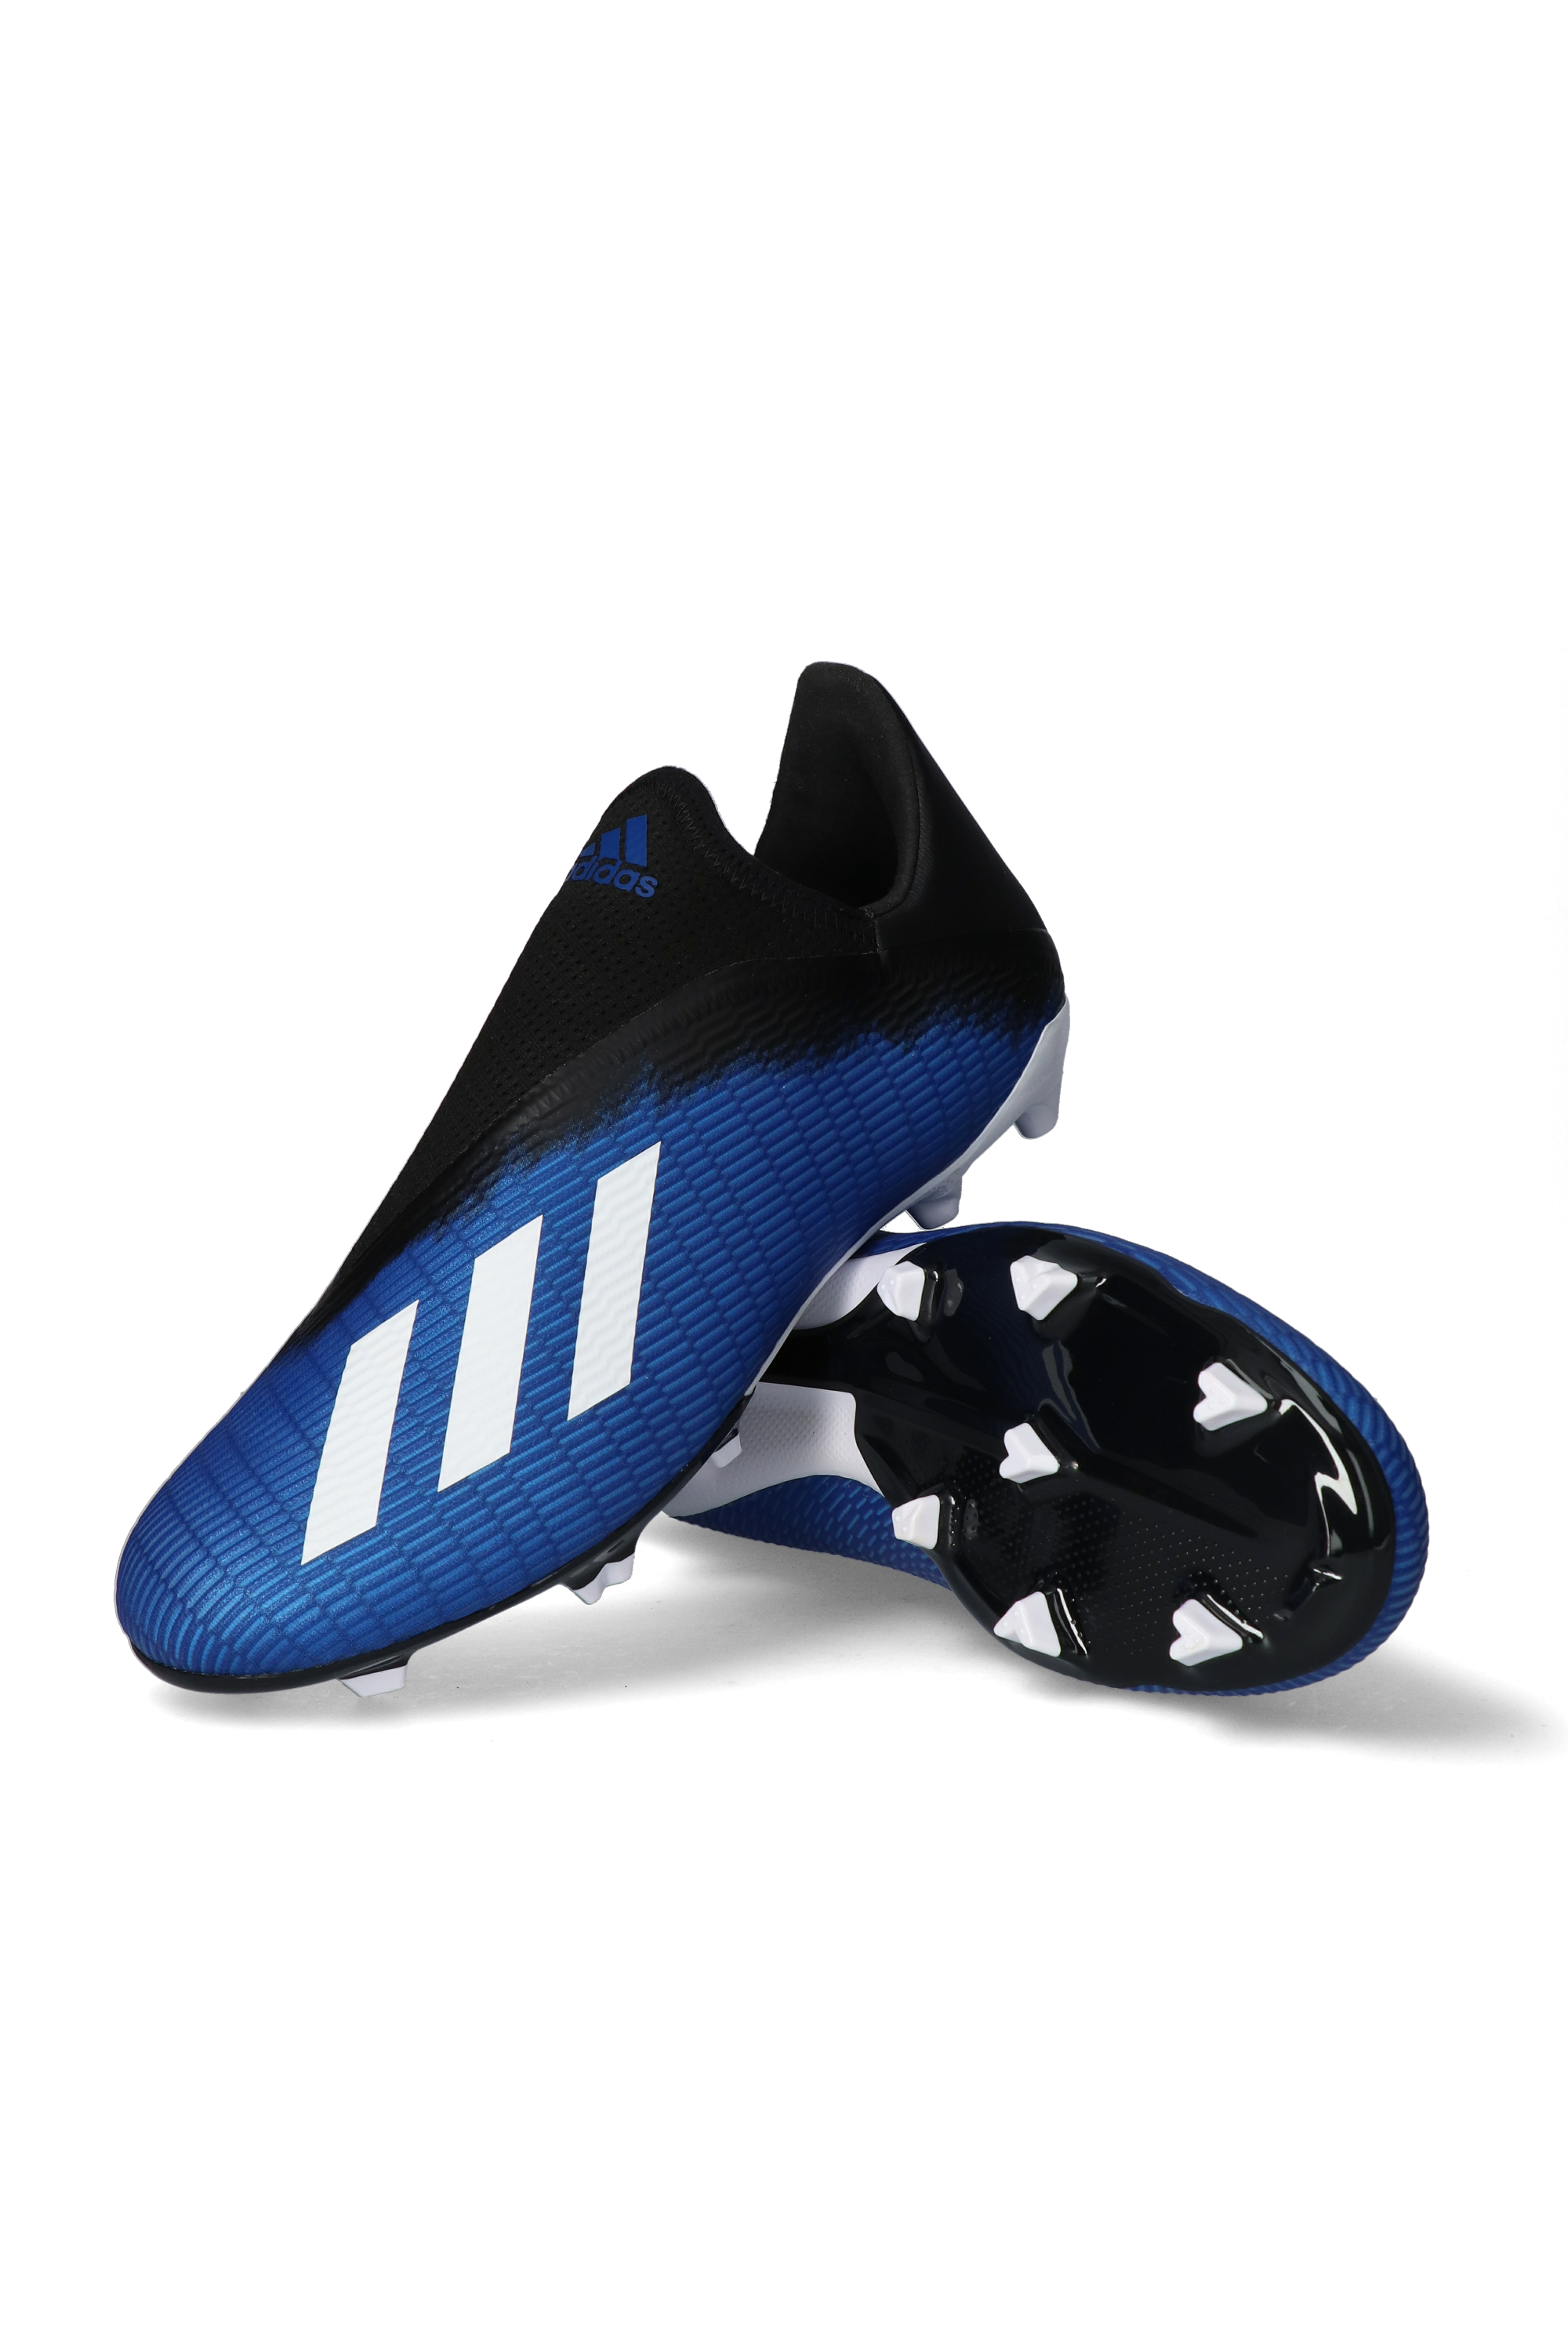 seco Barriga latín adidas X 19.3 LL FG Firm Ground Boots | R-GOL.com - Football boots &  equipment